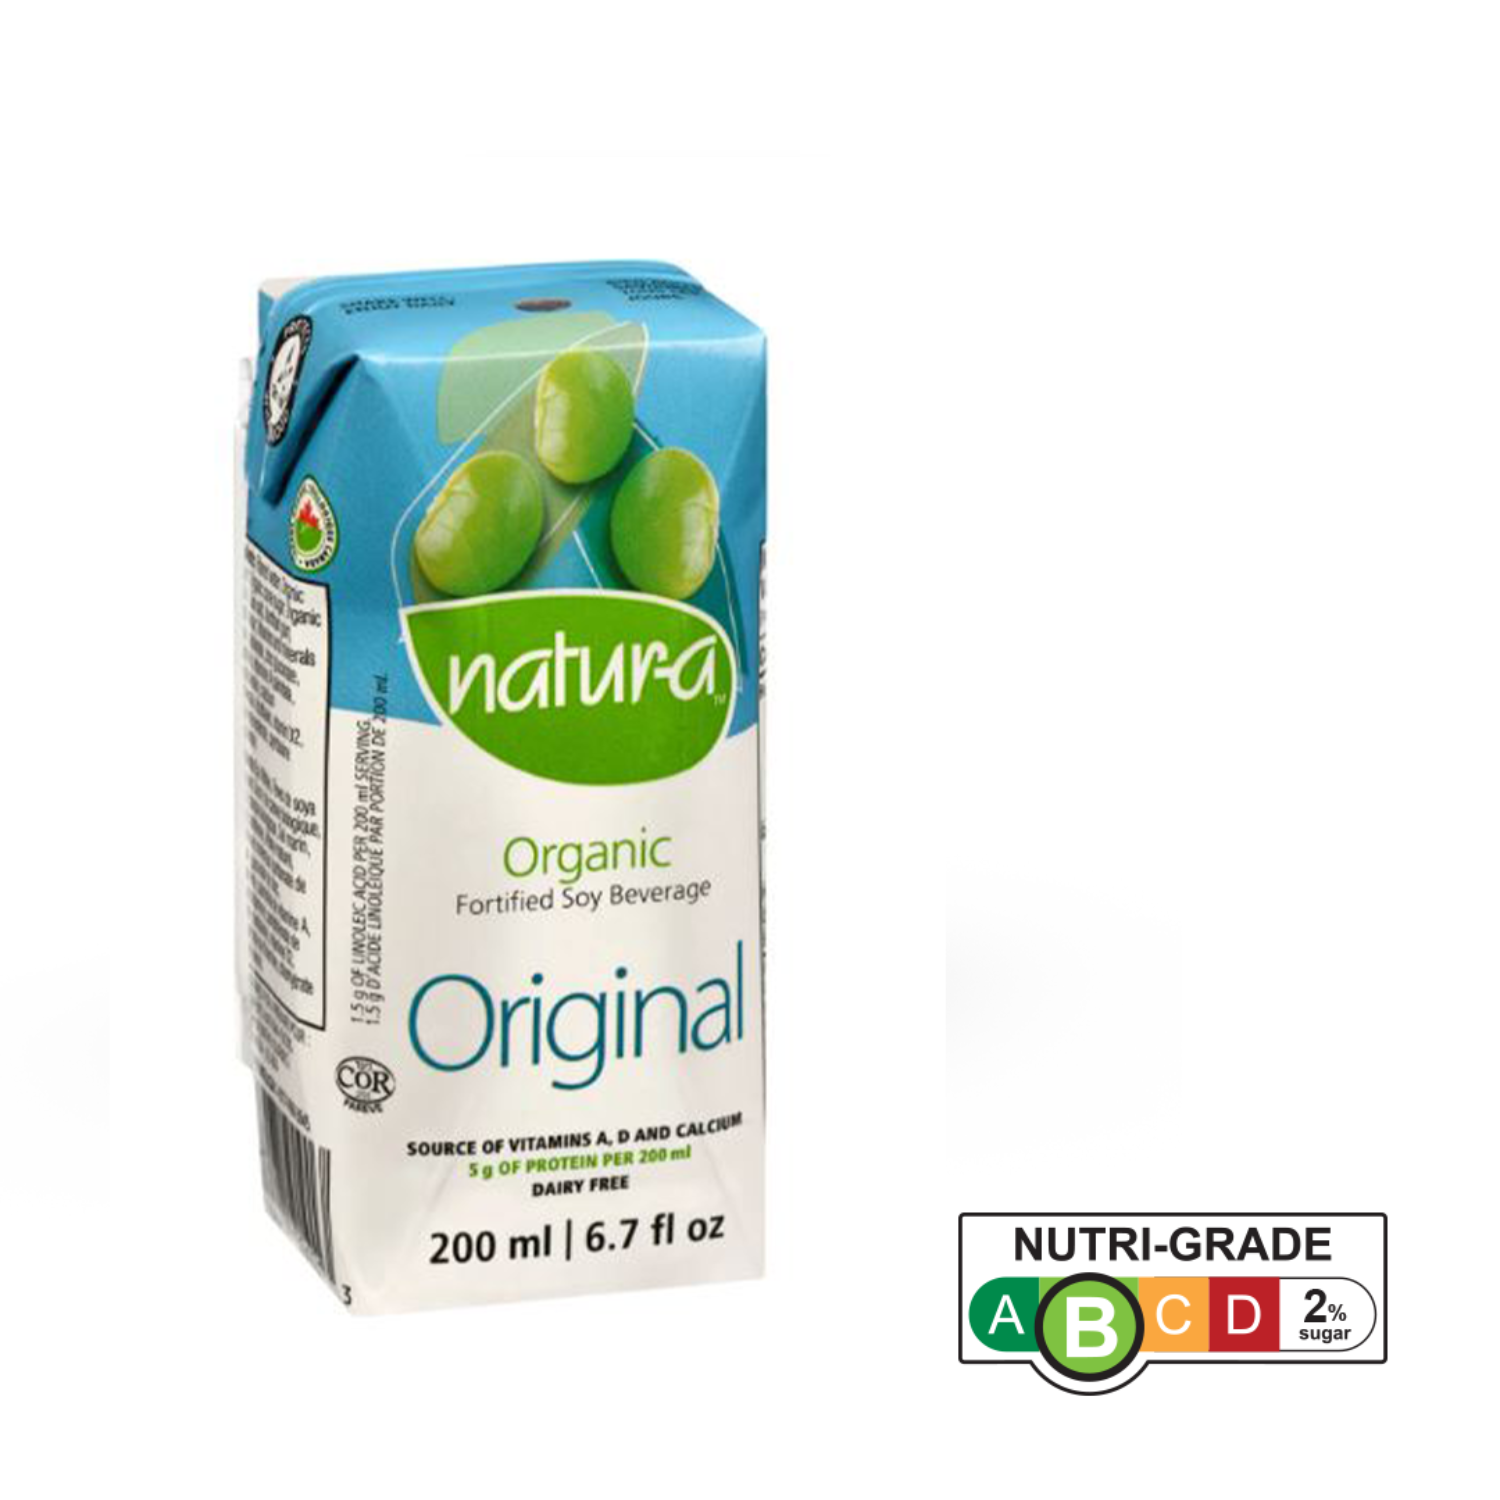 Natur-a Enriched Soy Beverage - Original (Organic), 200 ml. - Triple pack